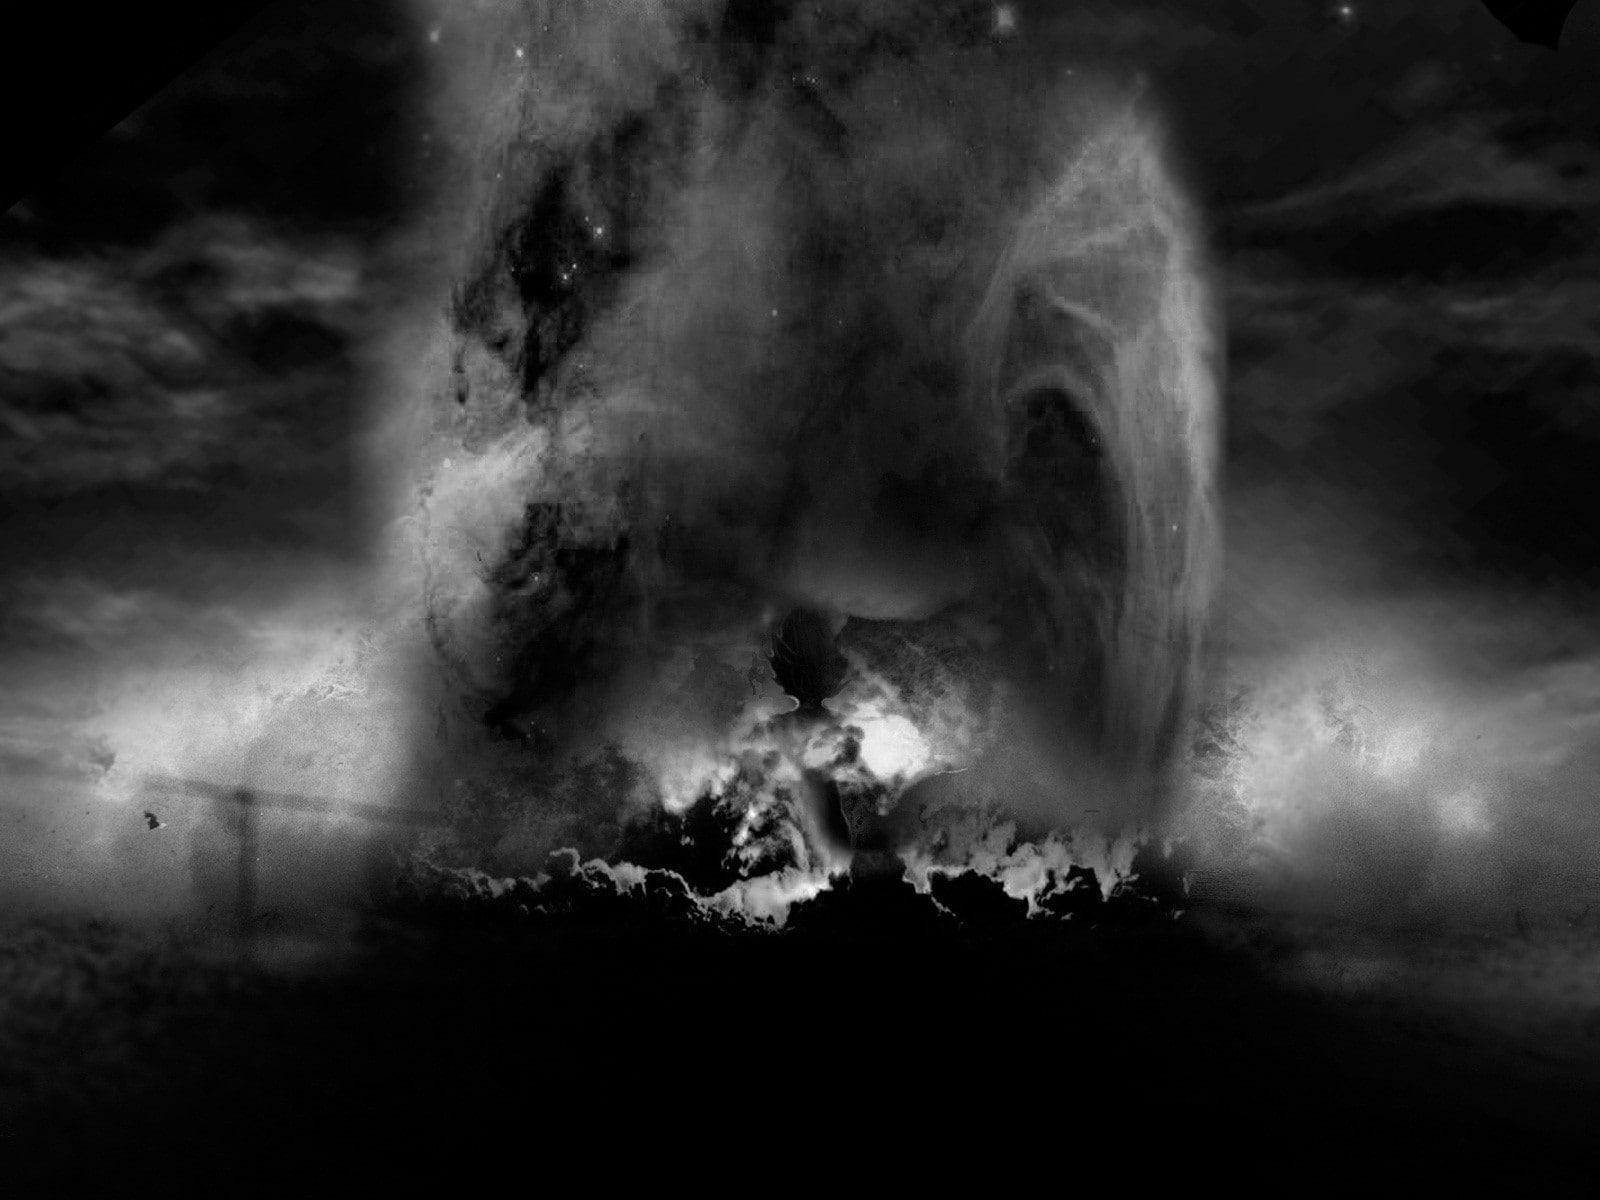 abstract dragon ball z, dark, night, cloud - sky, horror, nature